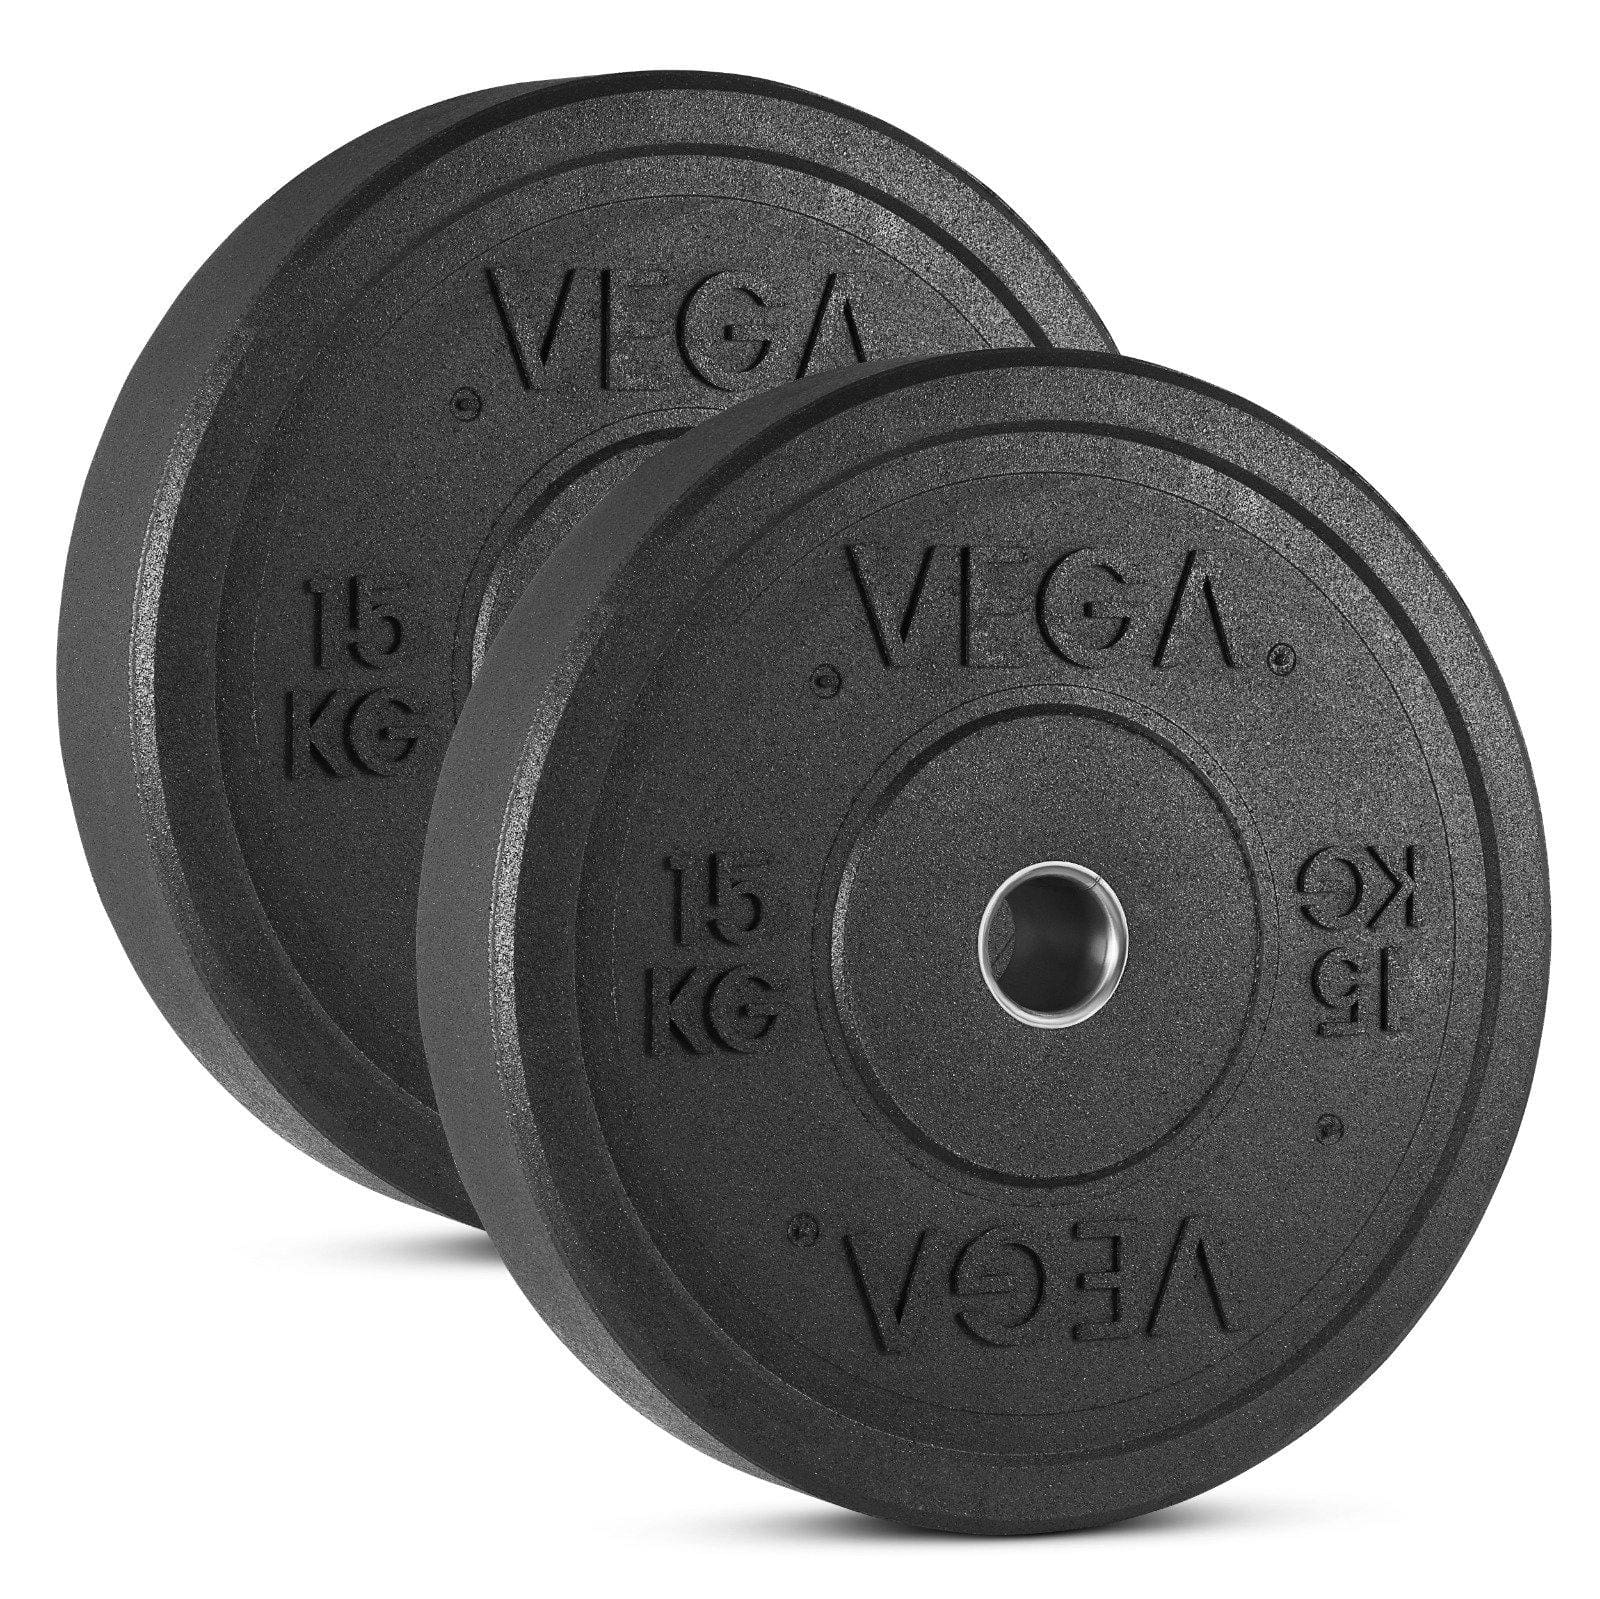 VEGA Fitness 100kg Rubber Bumper Plate Set with 7ft Escape Olympic Power Bar 15kg plates